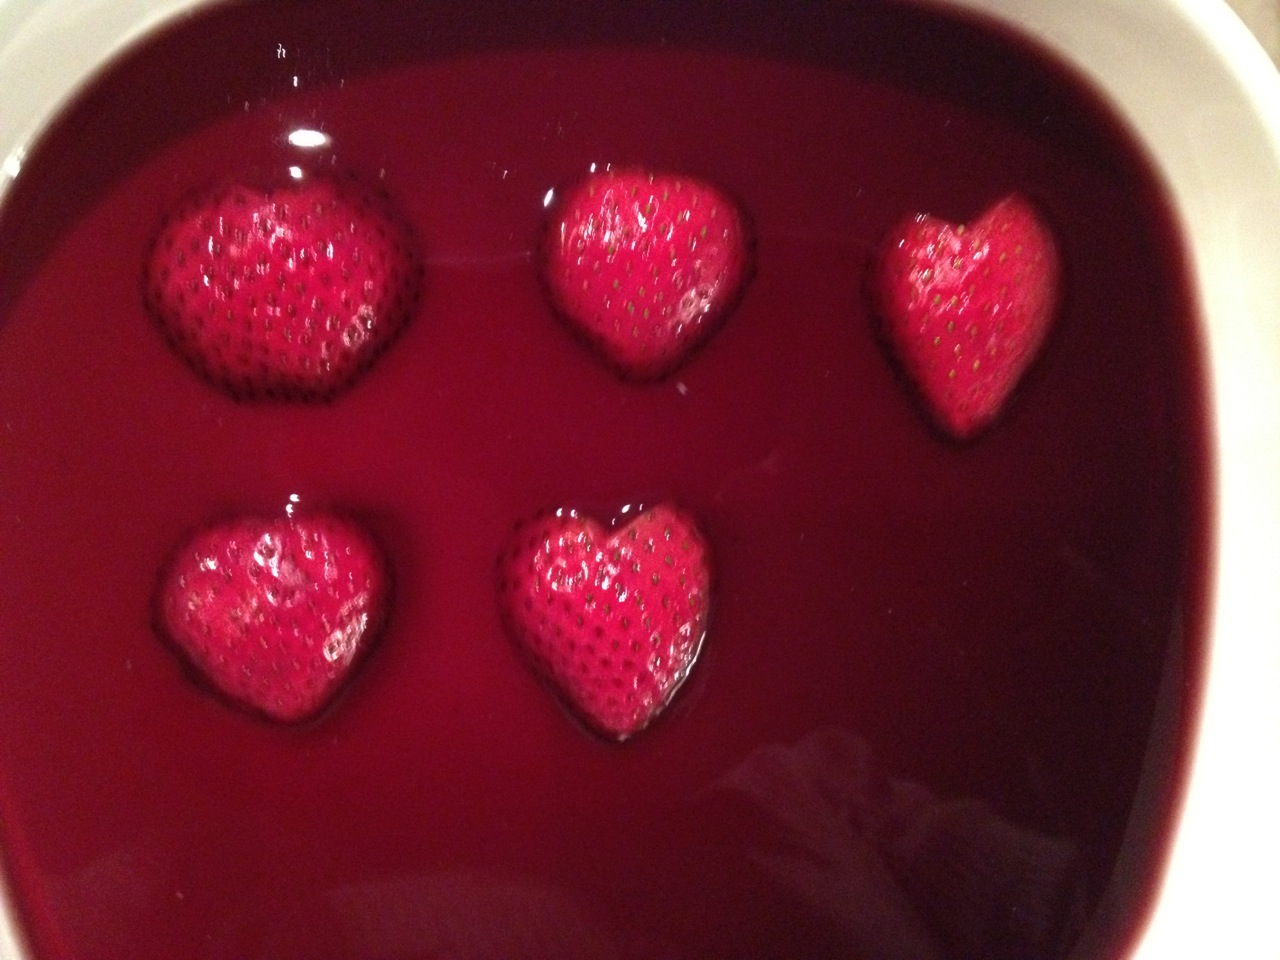 Hearts on gelatin